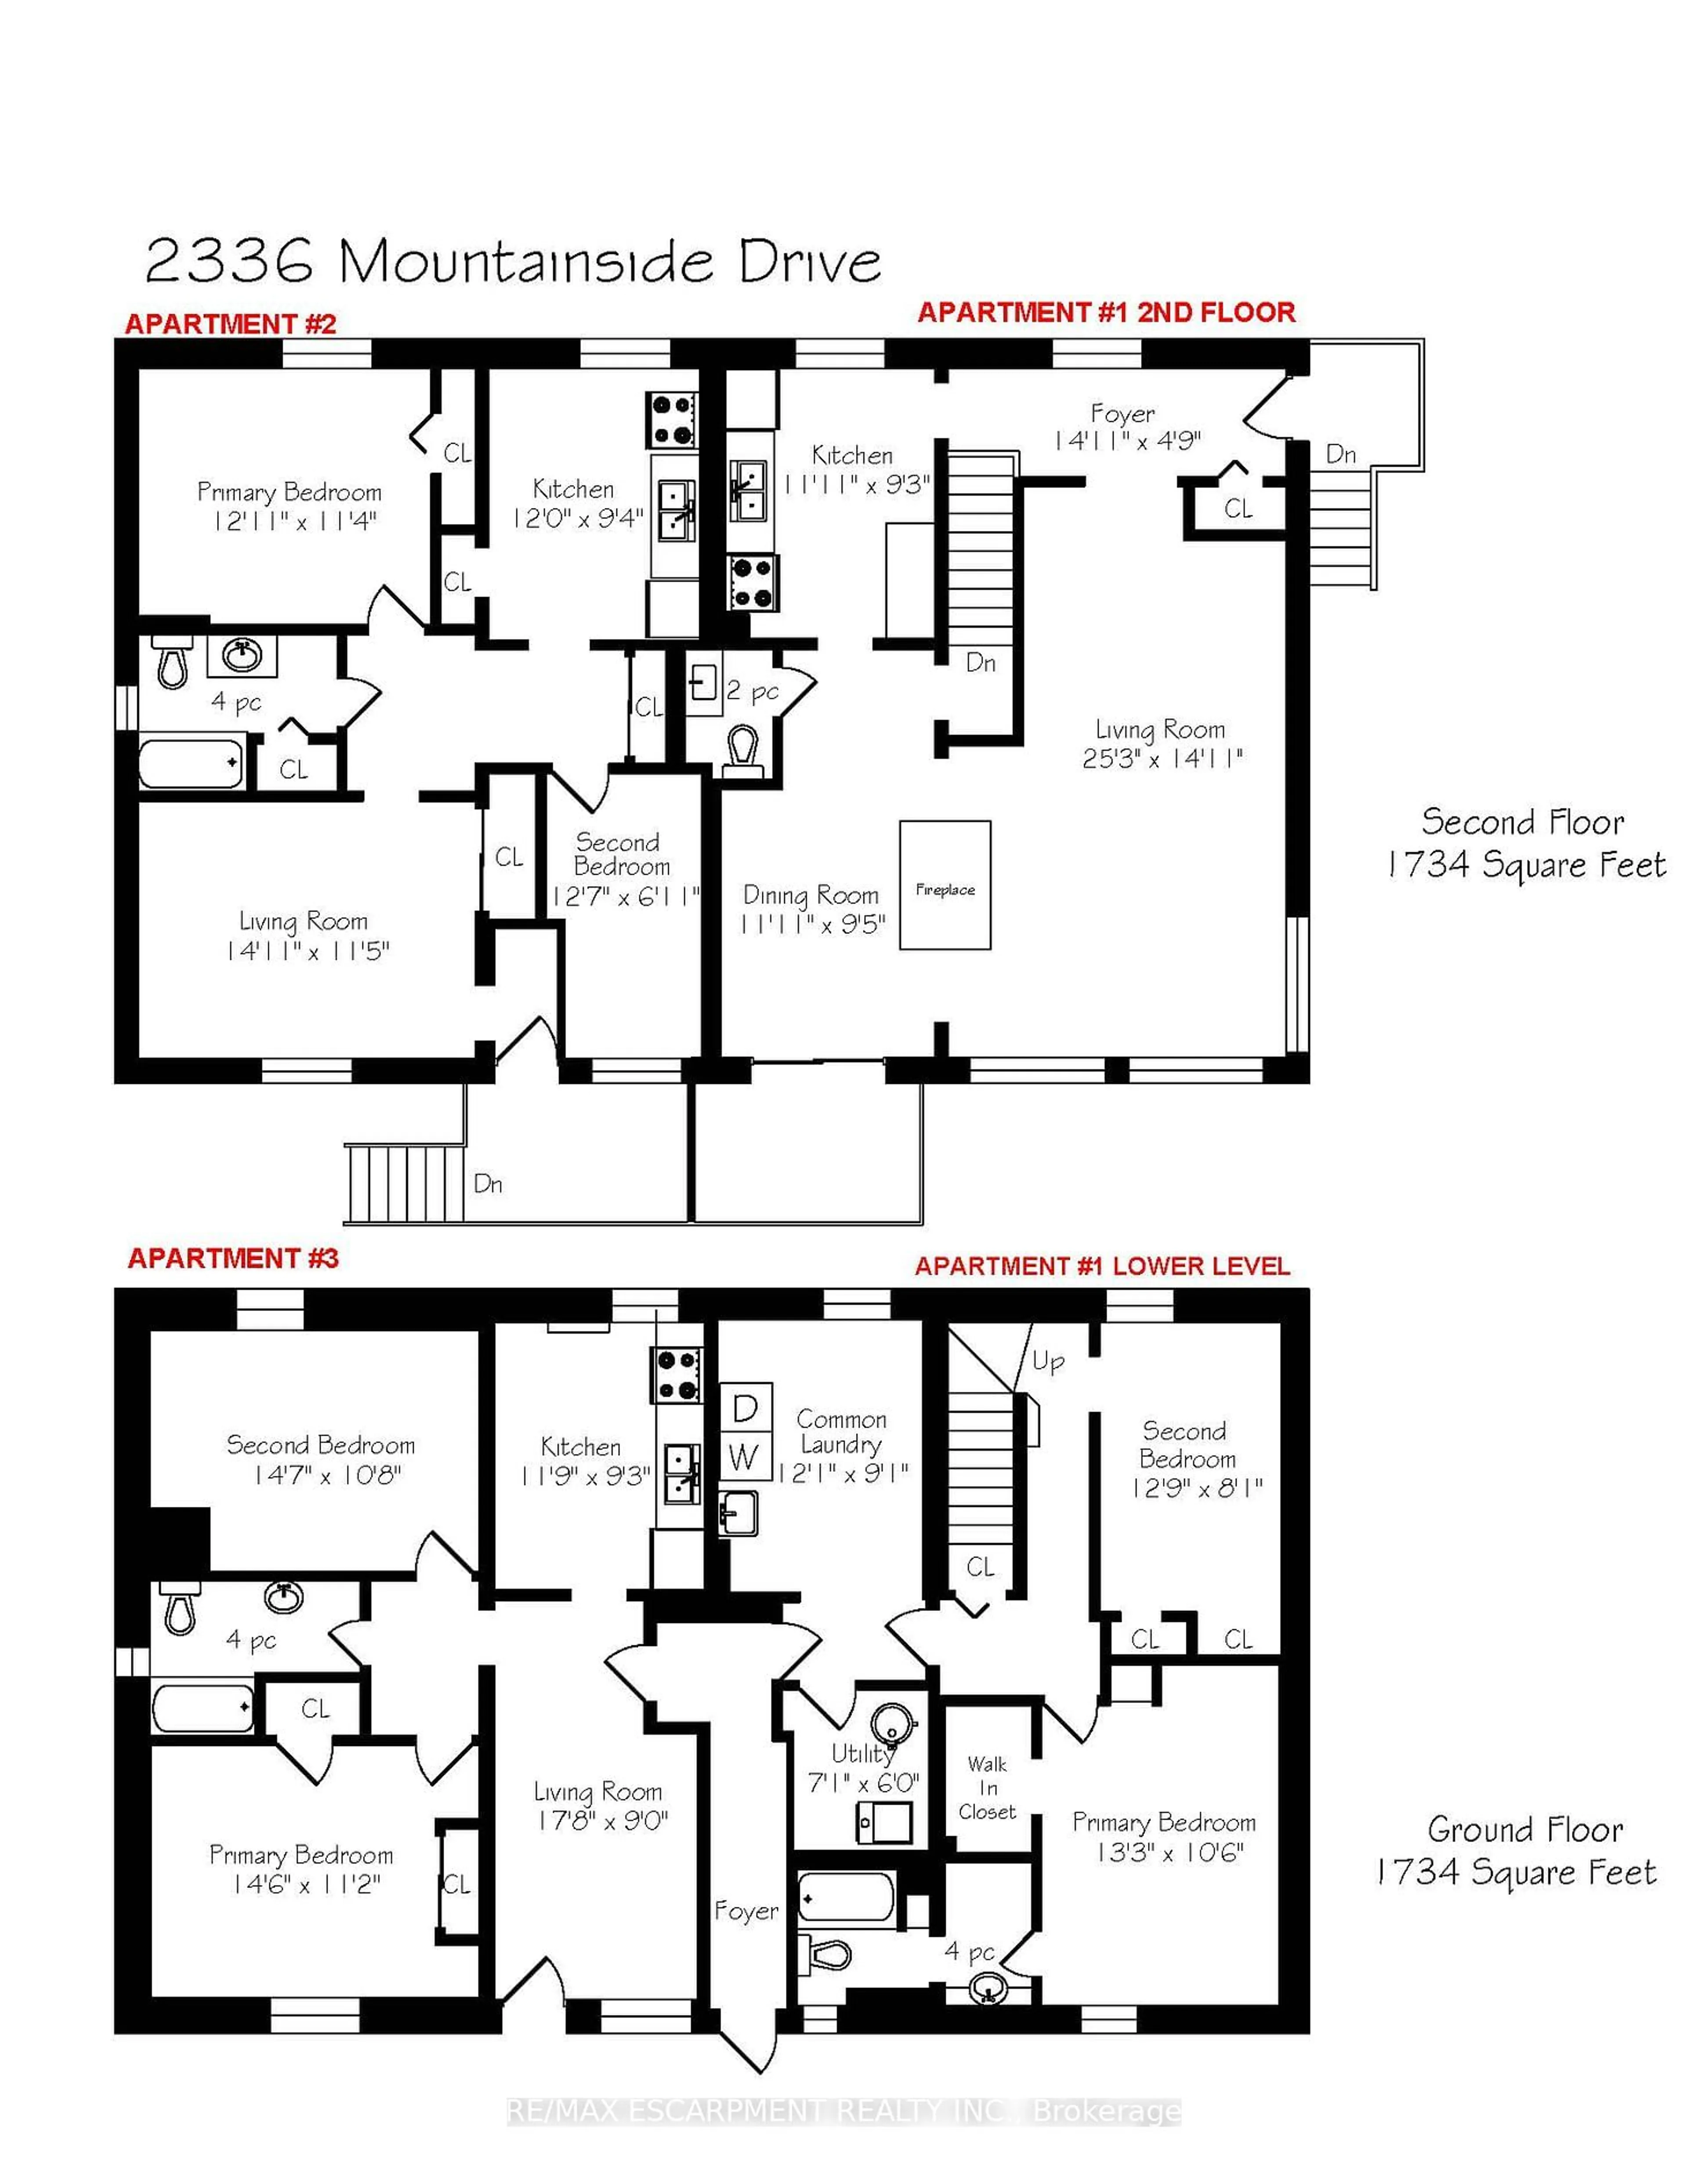 Floor plan for 2336 Mountainside Dr, Burlington Ontario L7P 1C2